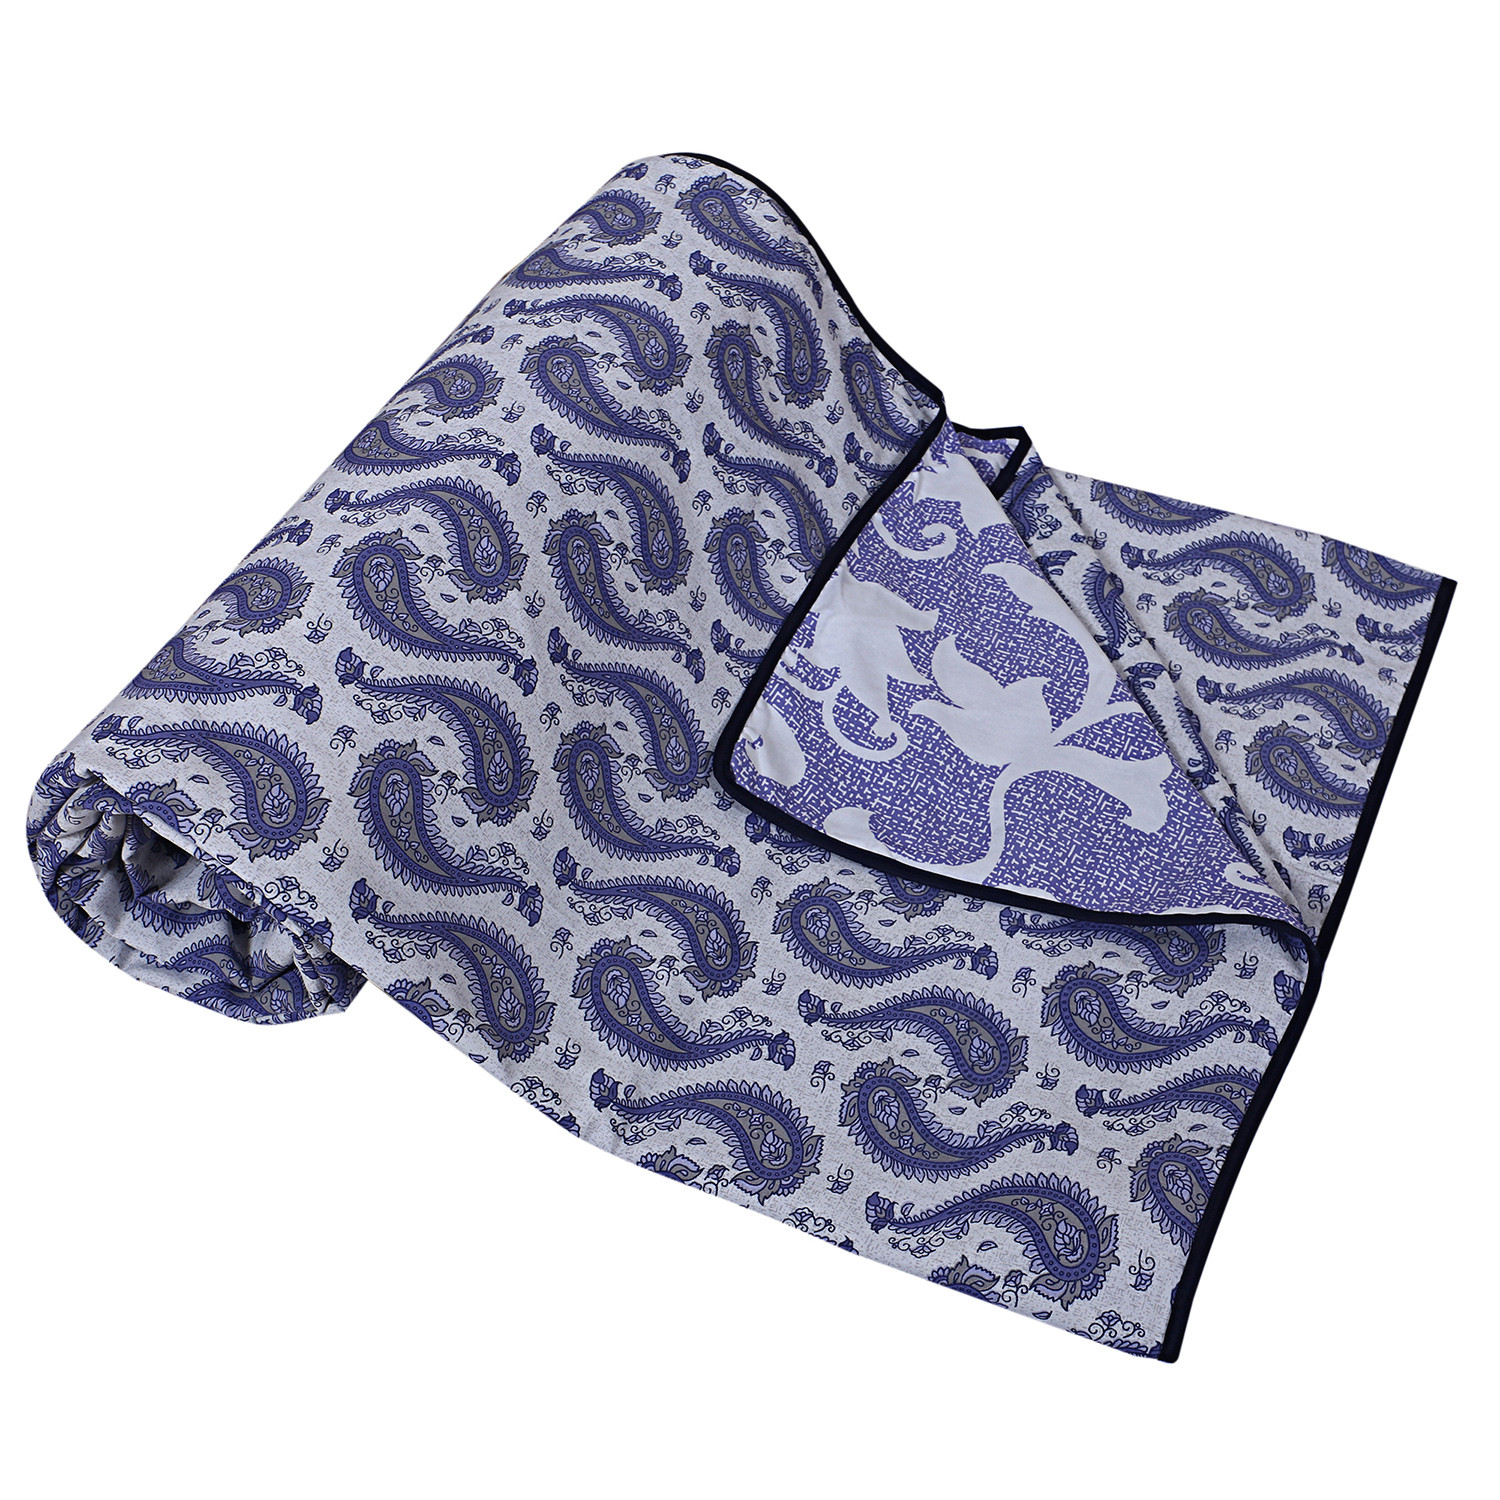 Kuber Industries Cotton Soft Lightweight Carry Design Reversible Single Bed Dohar | Blanket | AC Quilt for Home & Travel (Purple)